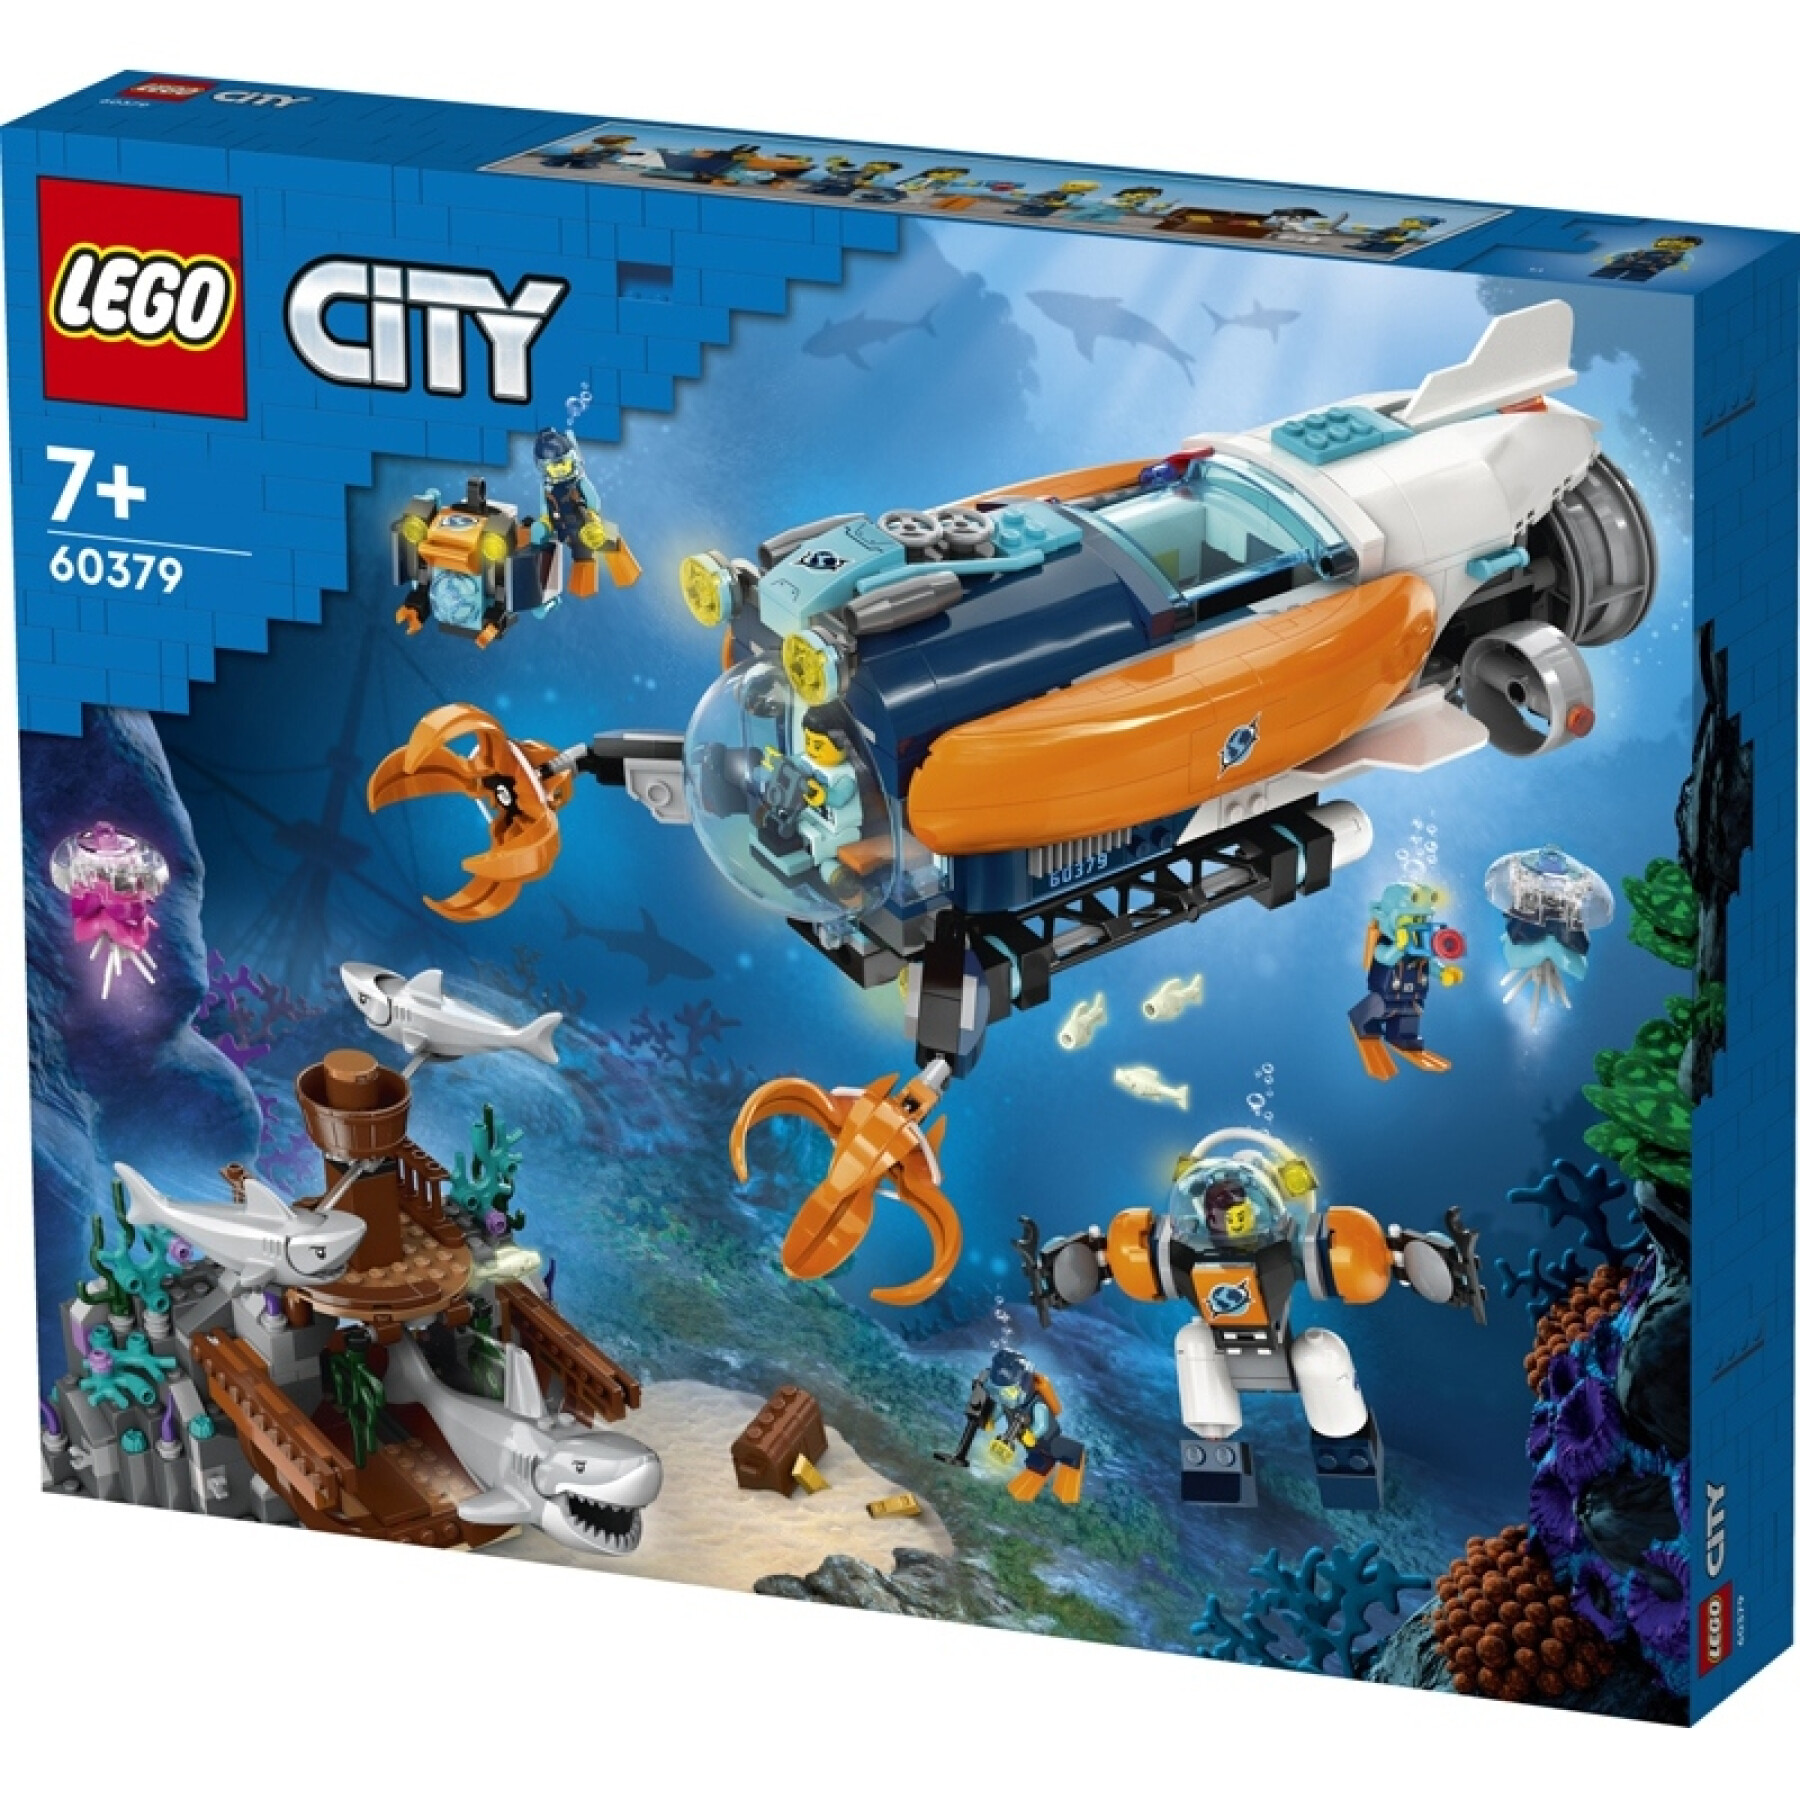 Underwater building sets Lego City